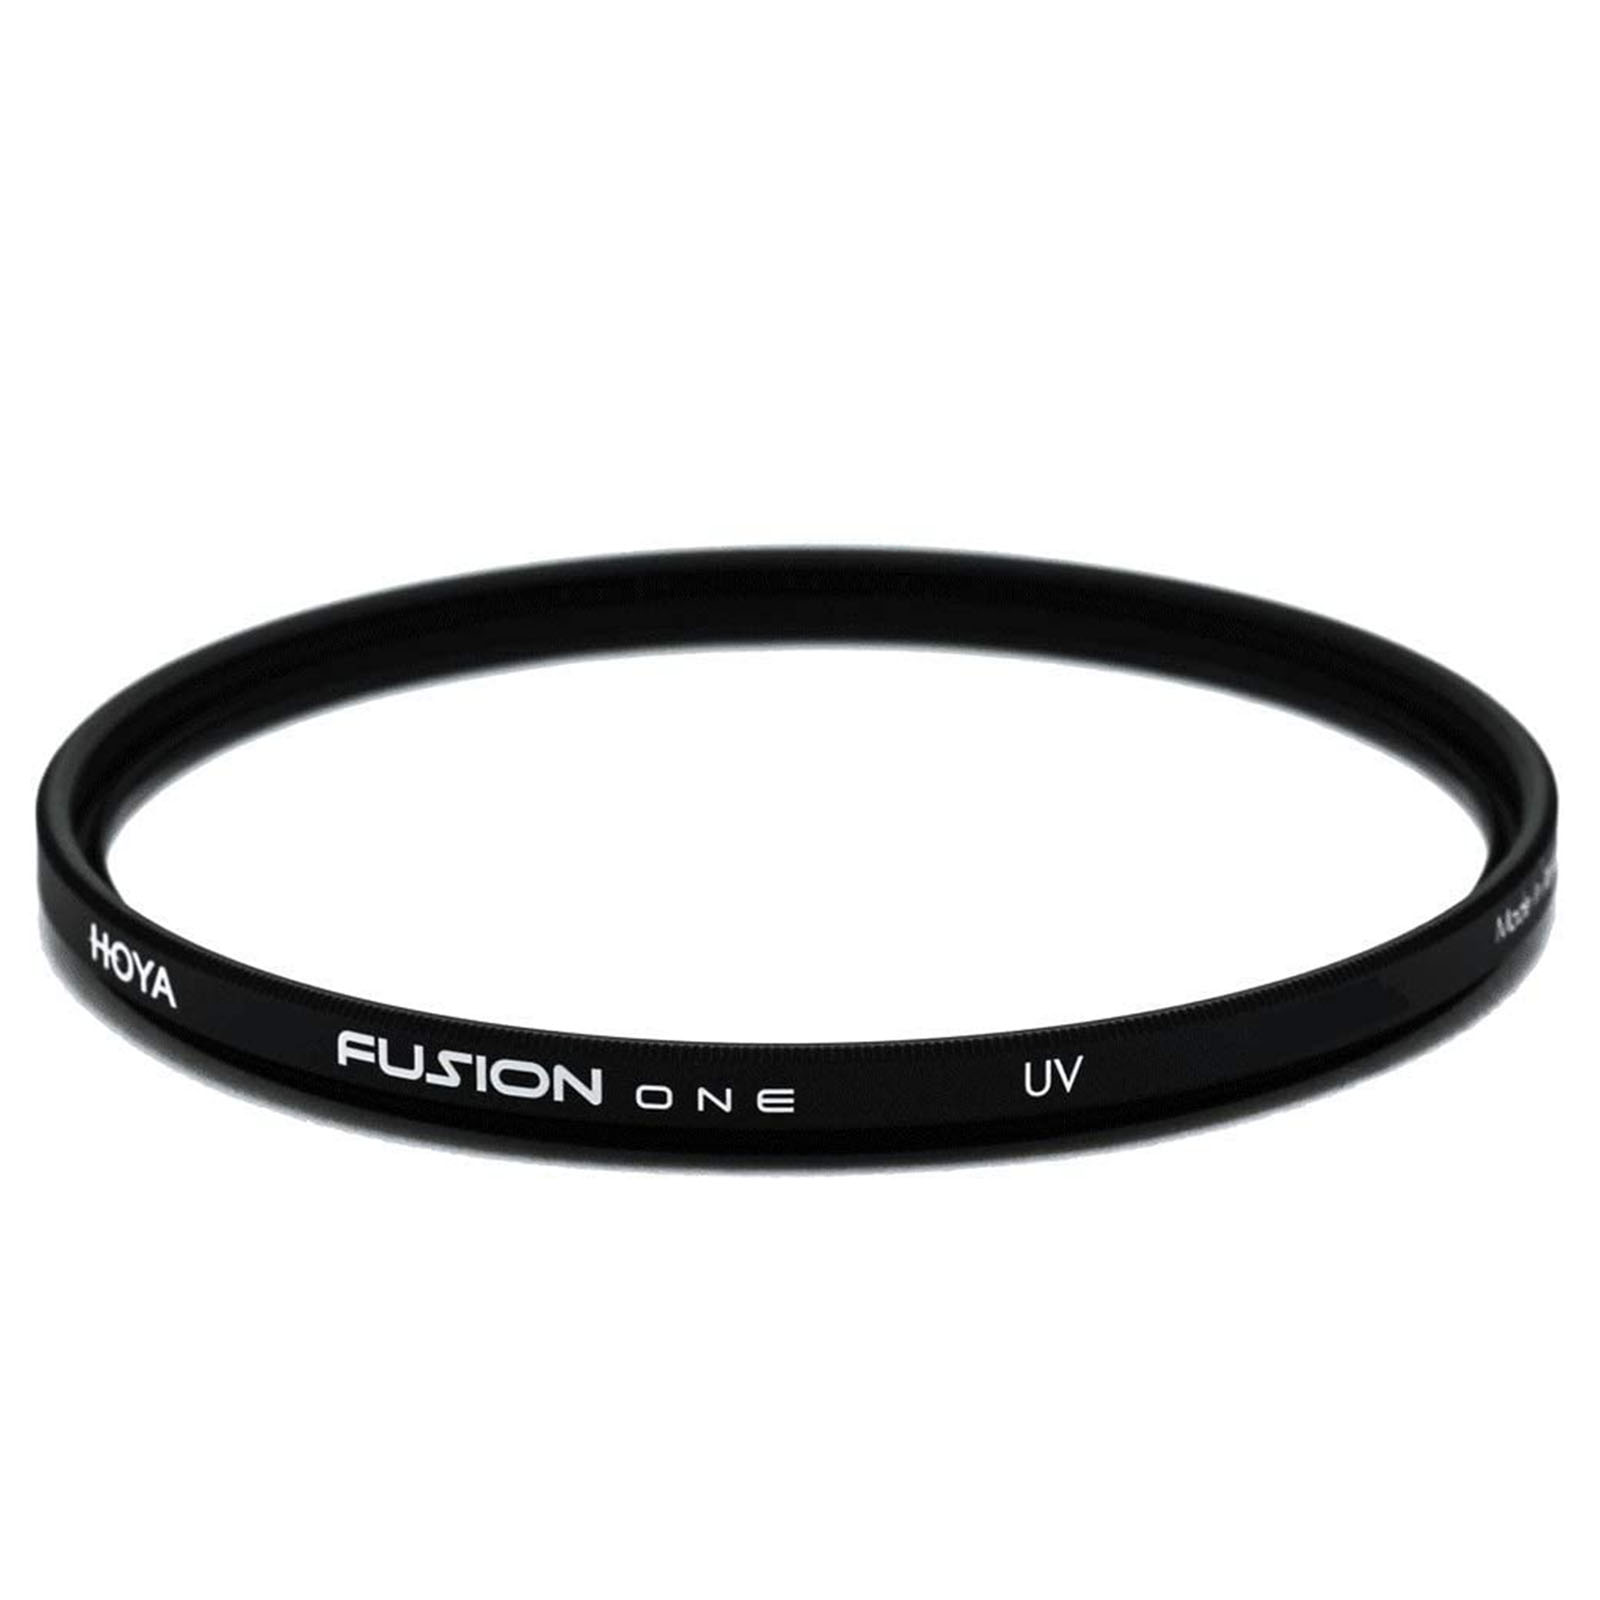 Image of Hoya 82mm Fusion One Next UV Filter